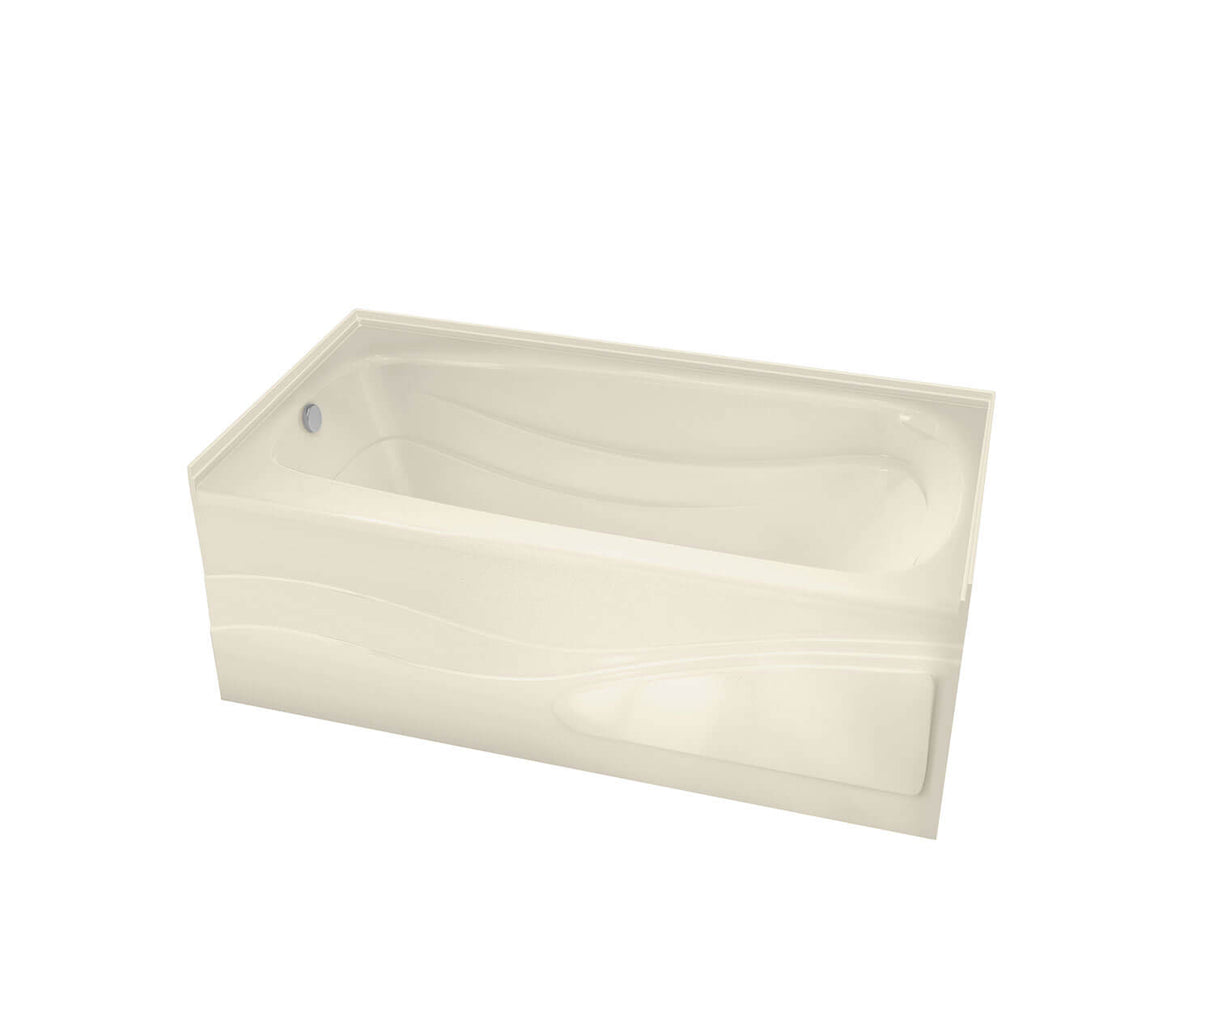 MAAX 102202-003-004-002 Tenderness 6036 Acrylic Alcove Right-Hand Drain Whirlpool Bathtub in Bone